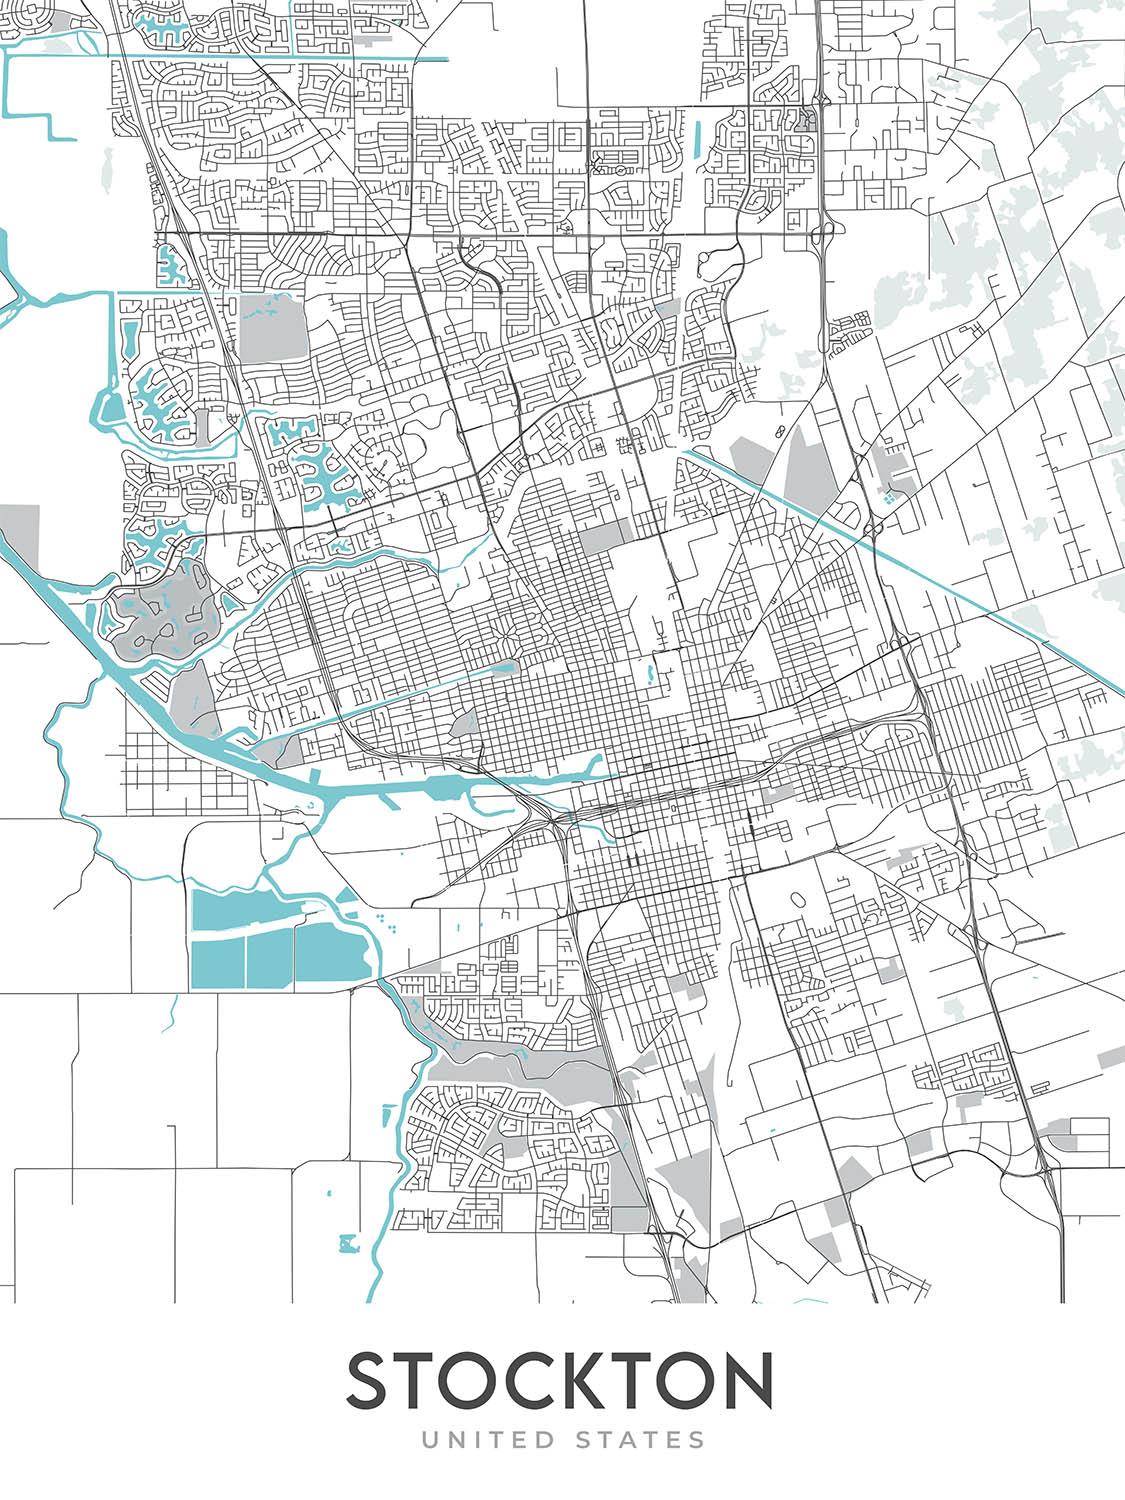 Moderner Stadtplan von Stockton, Kalifornien: Innenstadt, University of the Pacific, Stockton Arena, I-5, SR-99